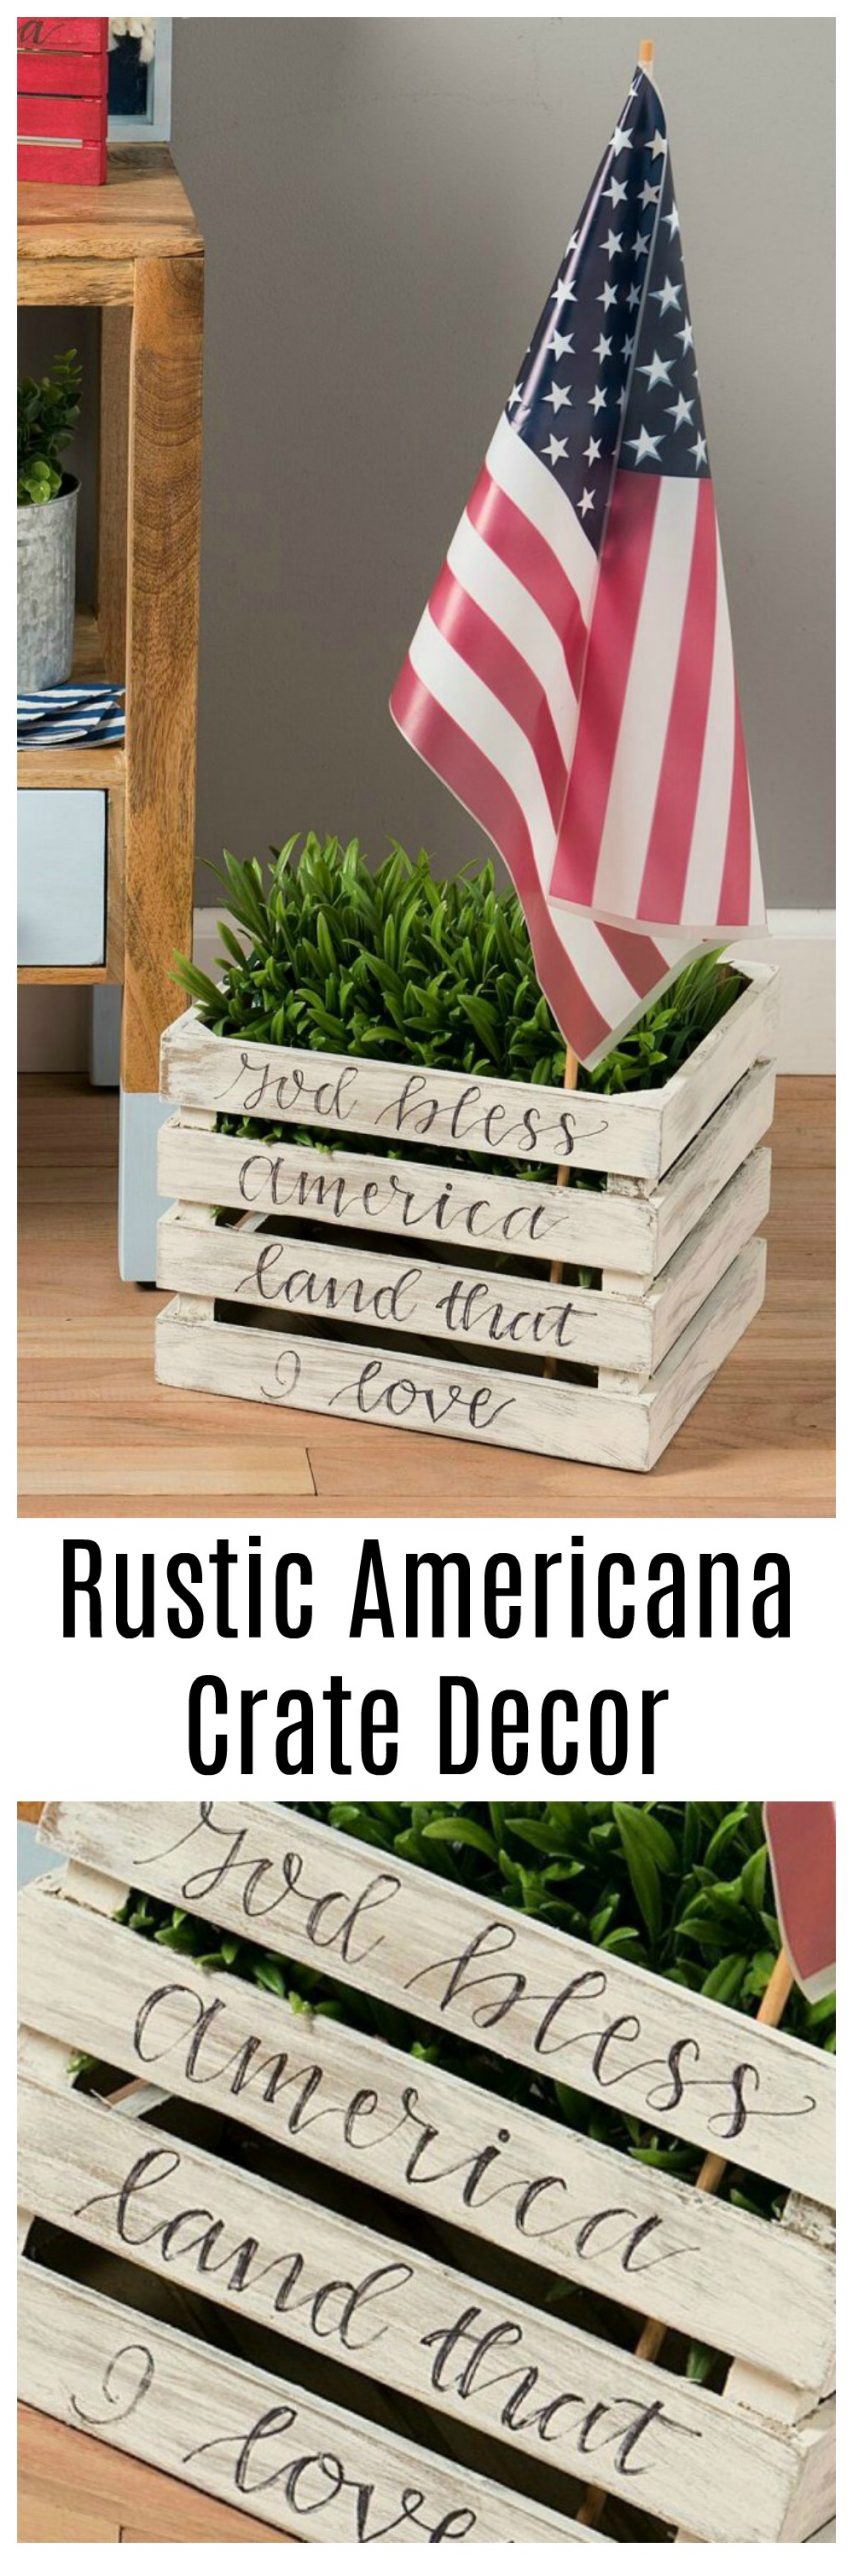 Rustic Americana Crate Decor